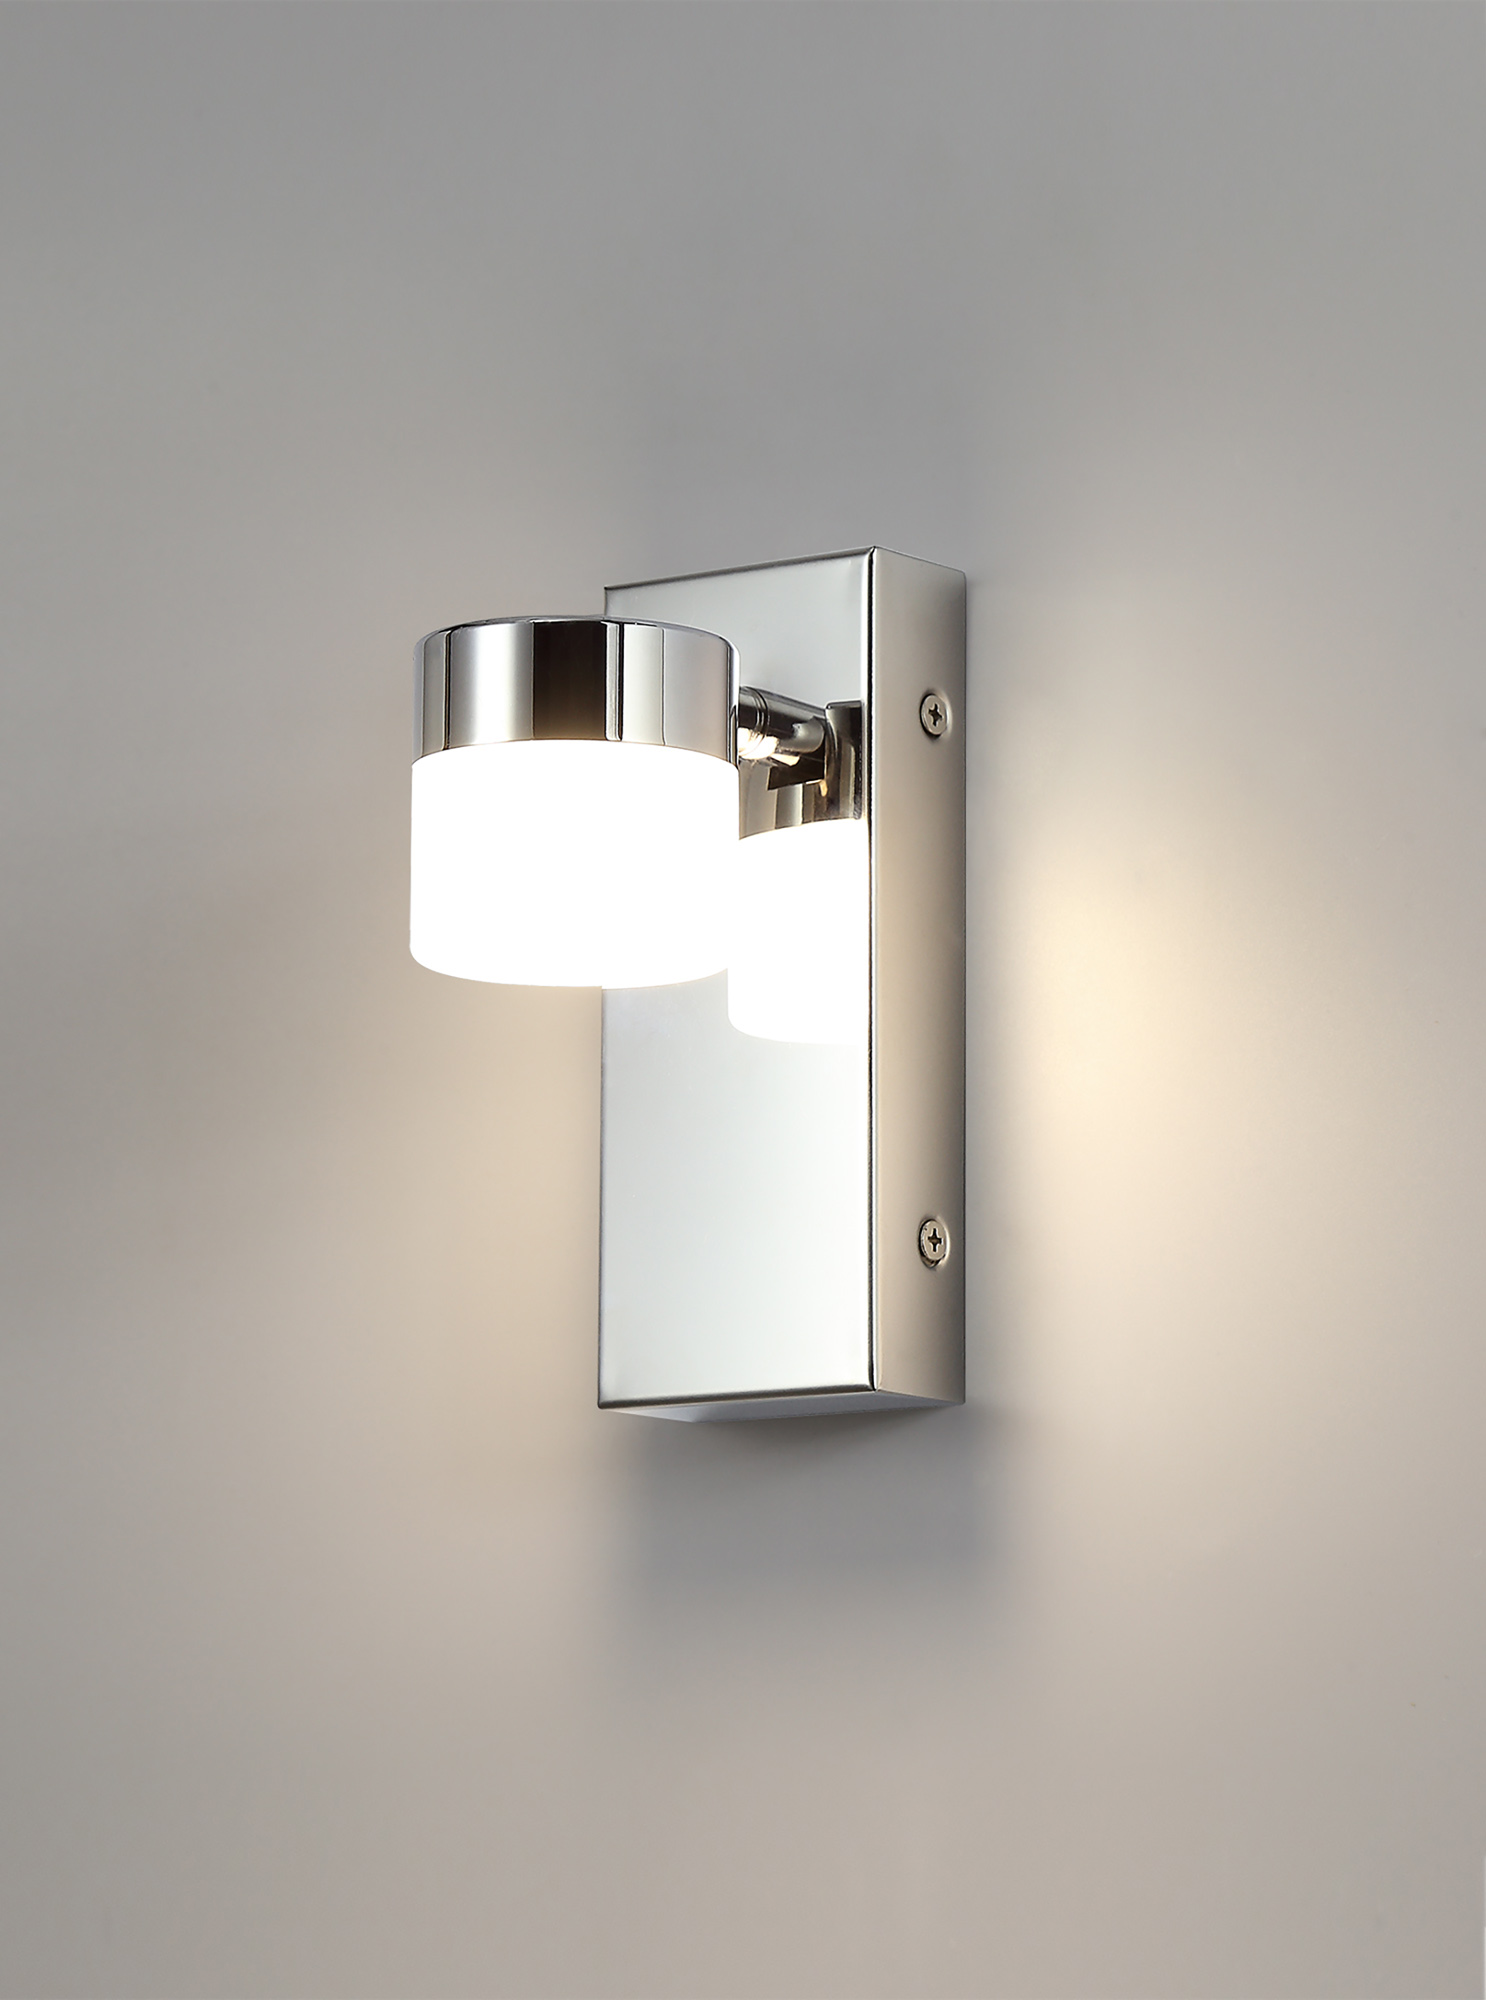 Led Wall Lights | Bathroom Spot light Chrome